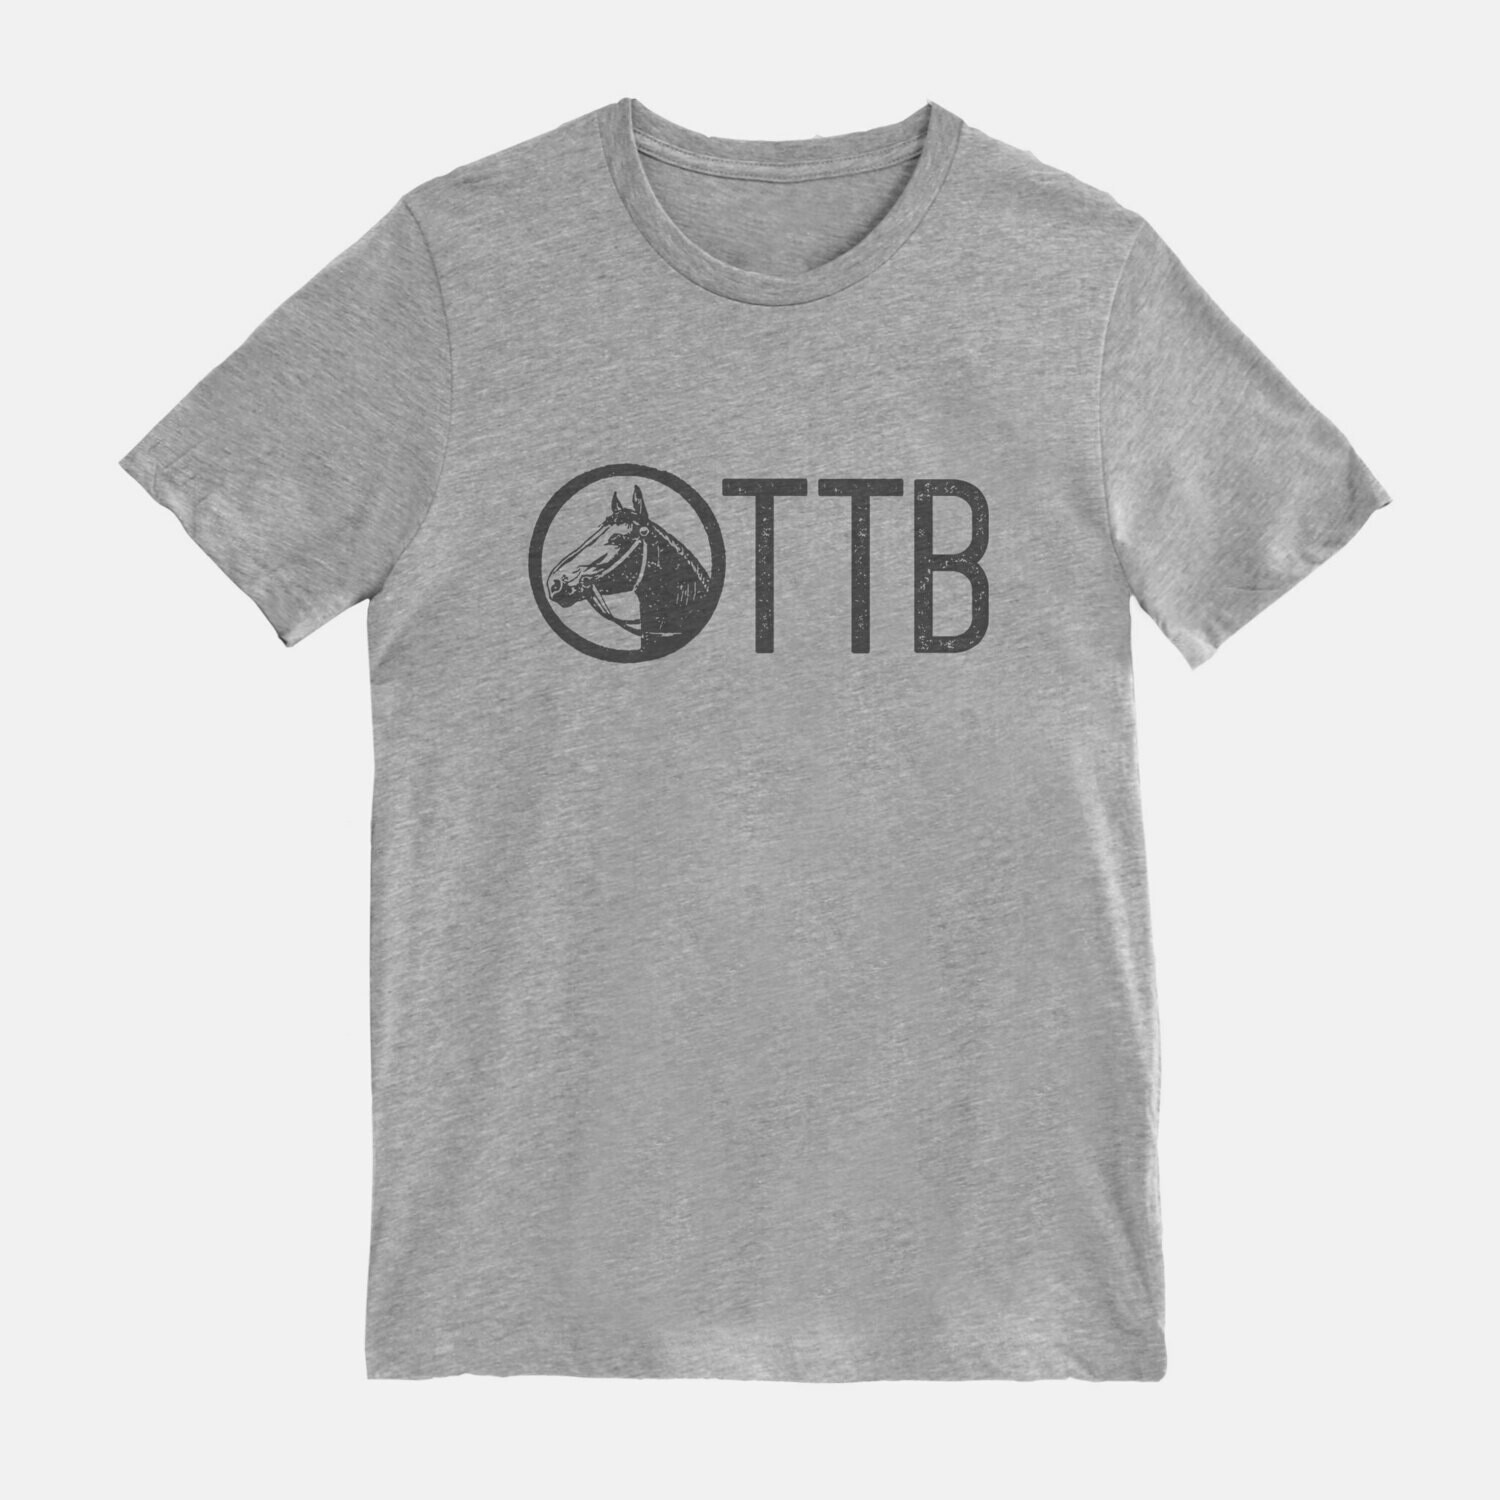 OTTB Off Track Thoroughbred Equestrian Horse T-shirt Tee